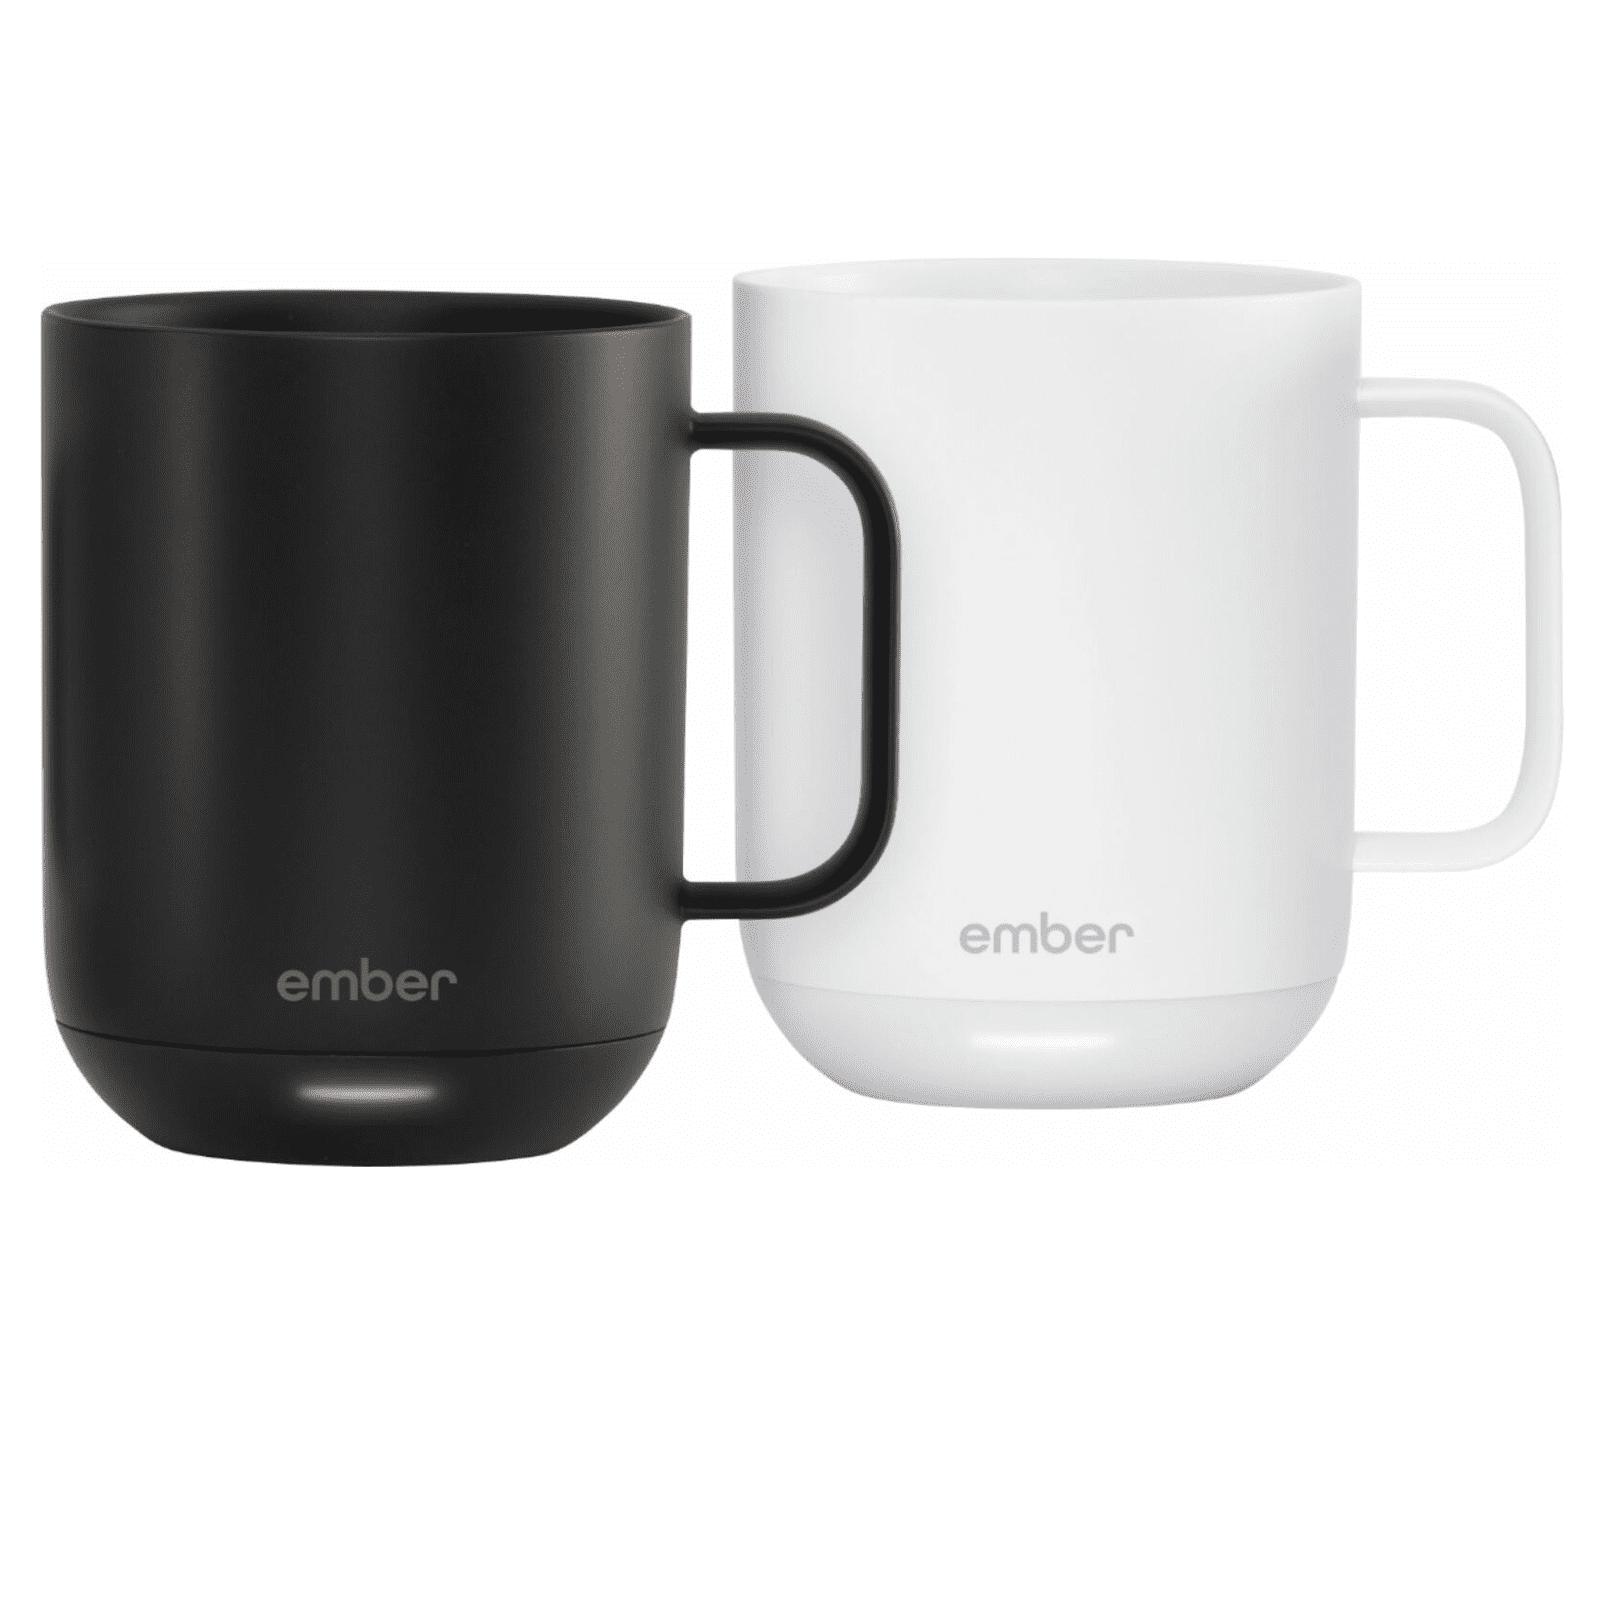 Ember Temperature Control Smart Mug 10 oz App Controlled Heated Mug Black 